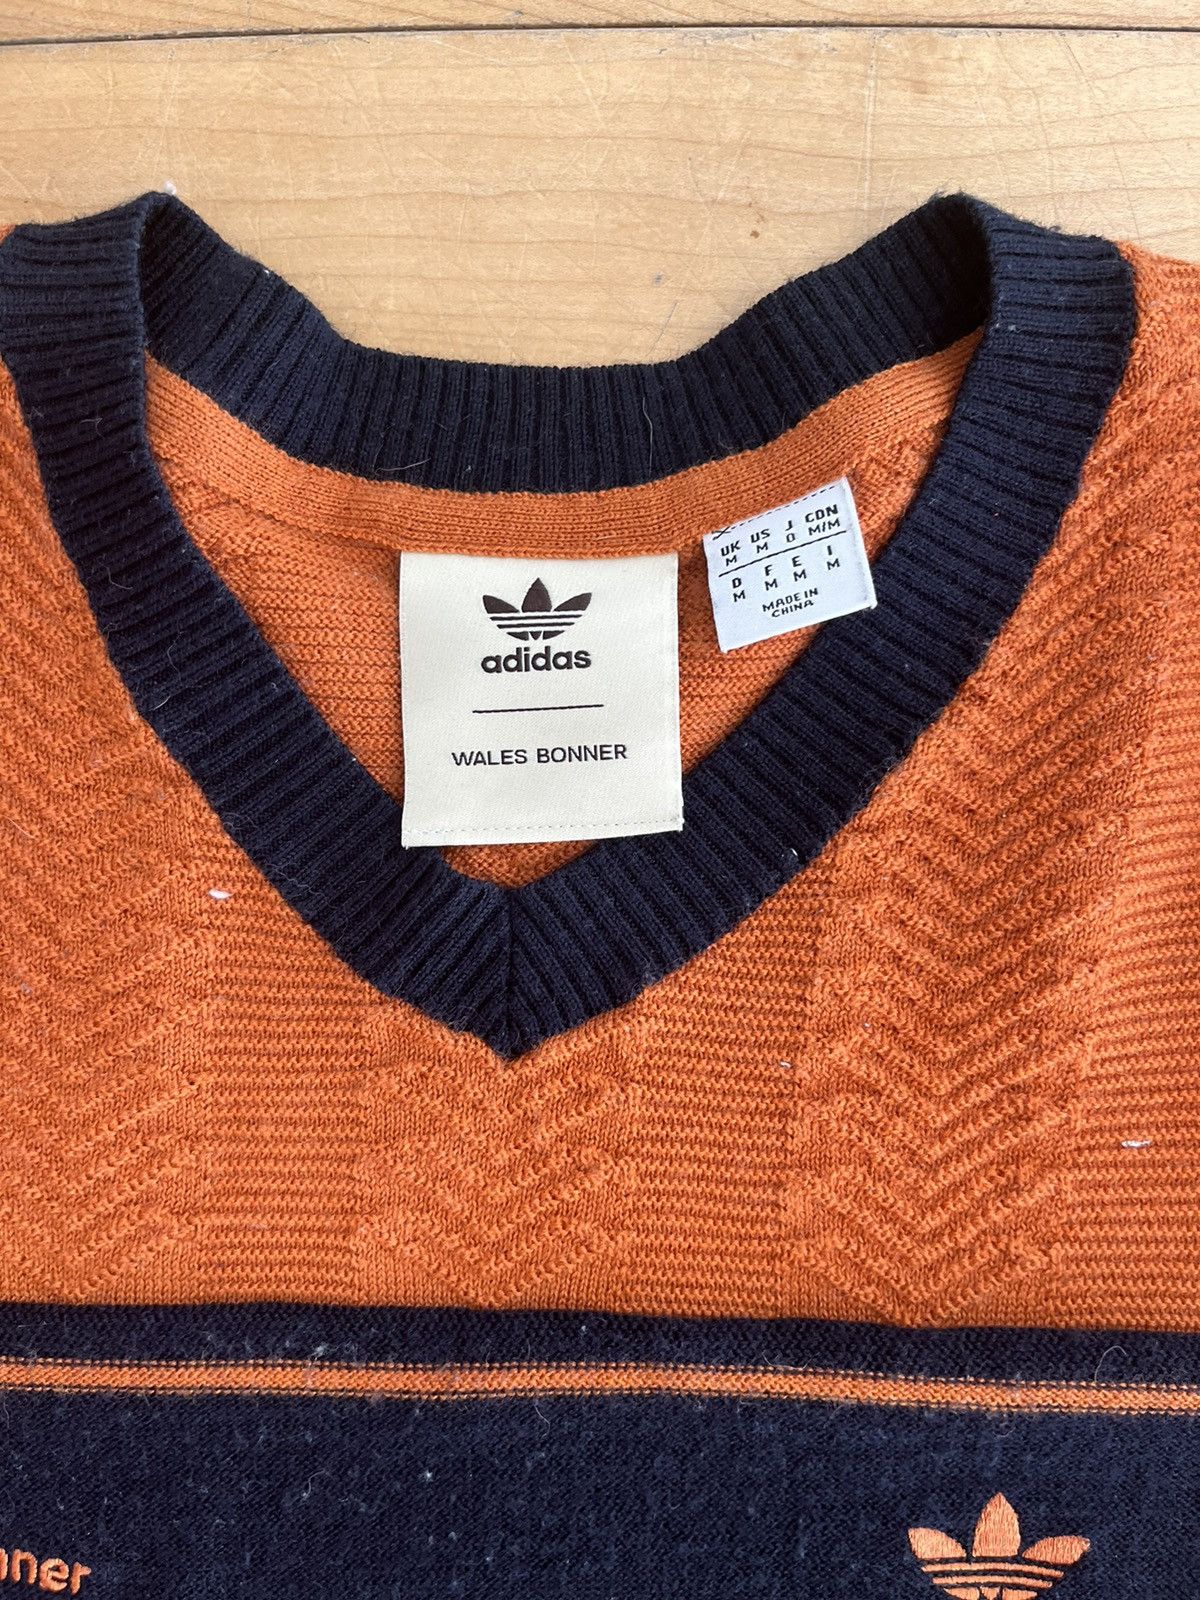 Wales Bonner x Adidas Knit Sweater - 5